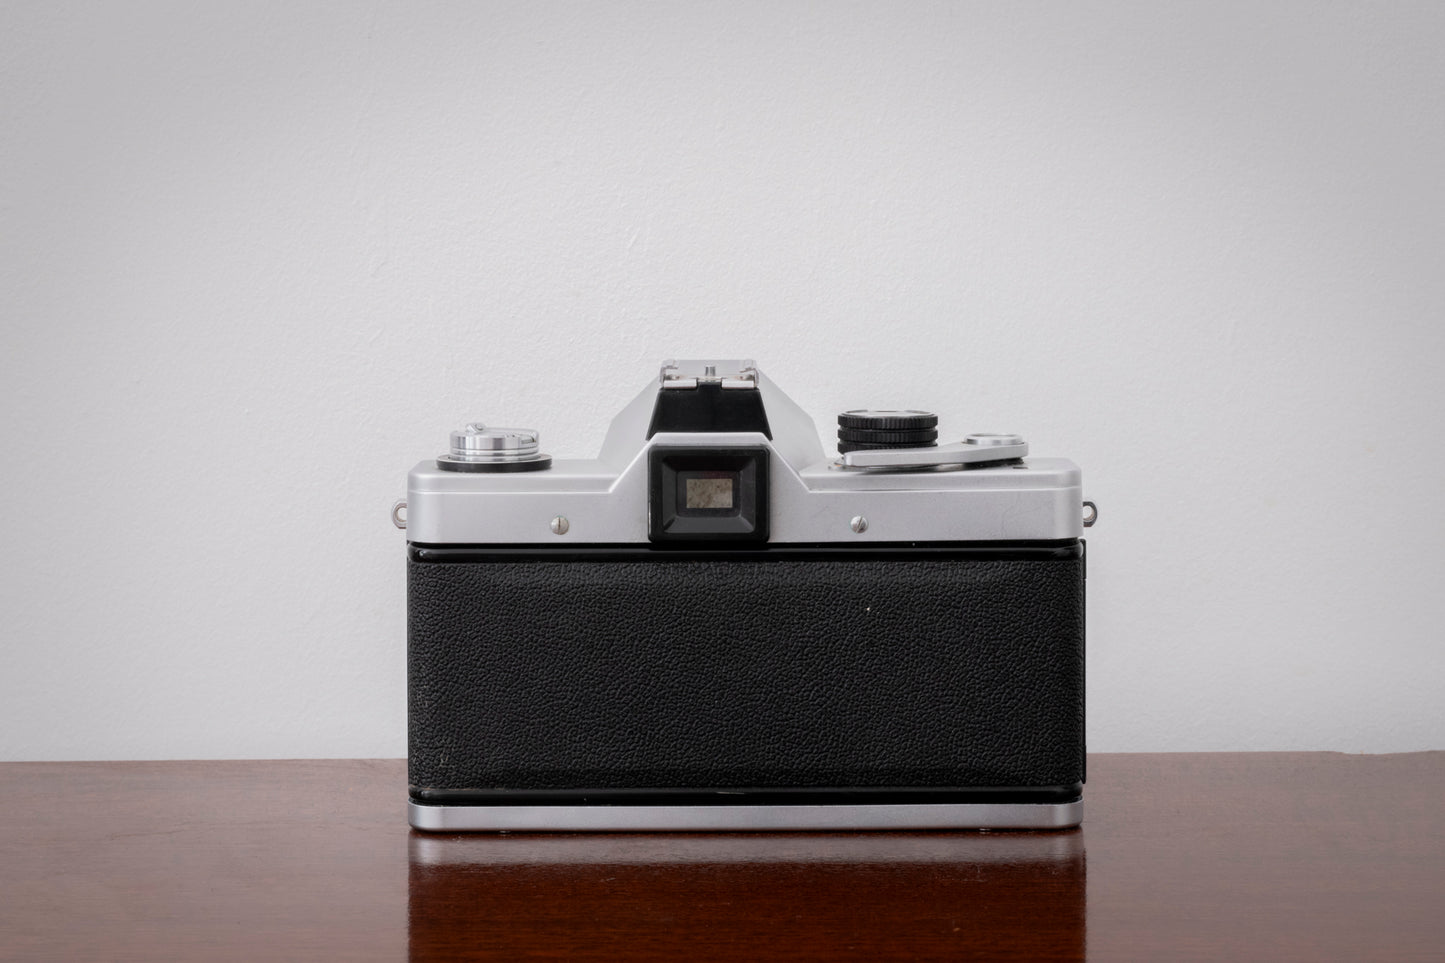 1975 Praktica Super TL2 35mm Film Camera Kit with Carl Zeiss Tessar 50mm F2.8 Lens